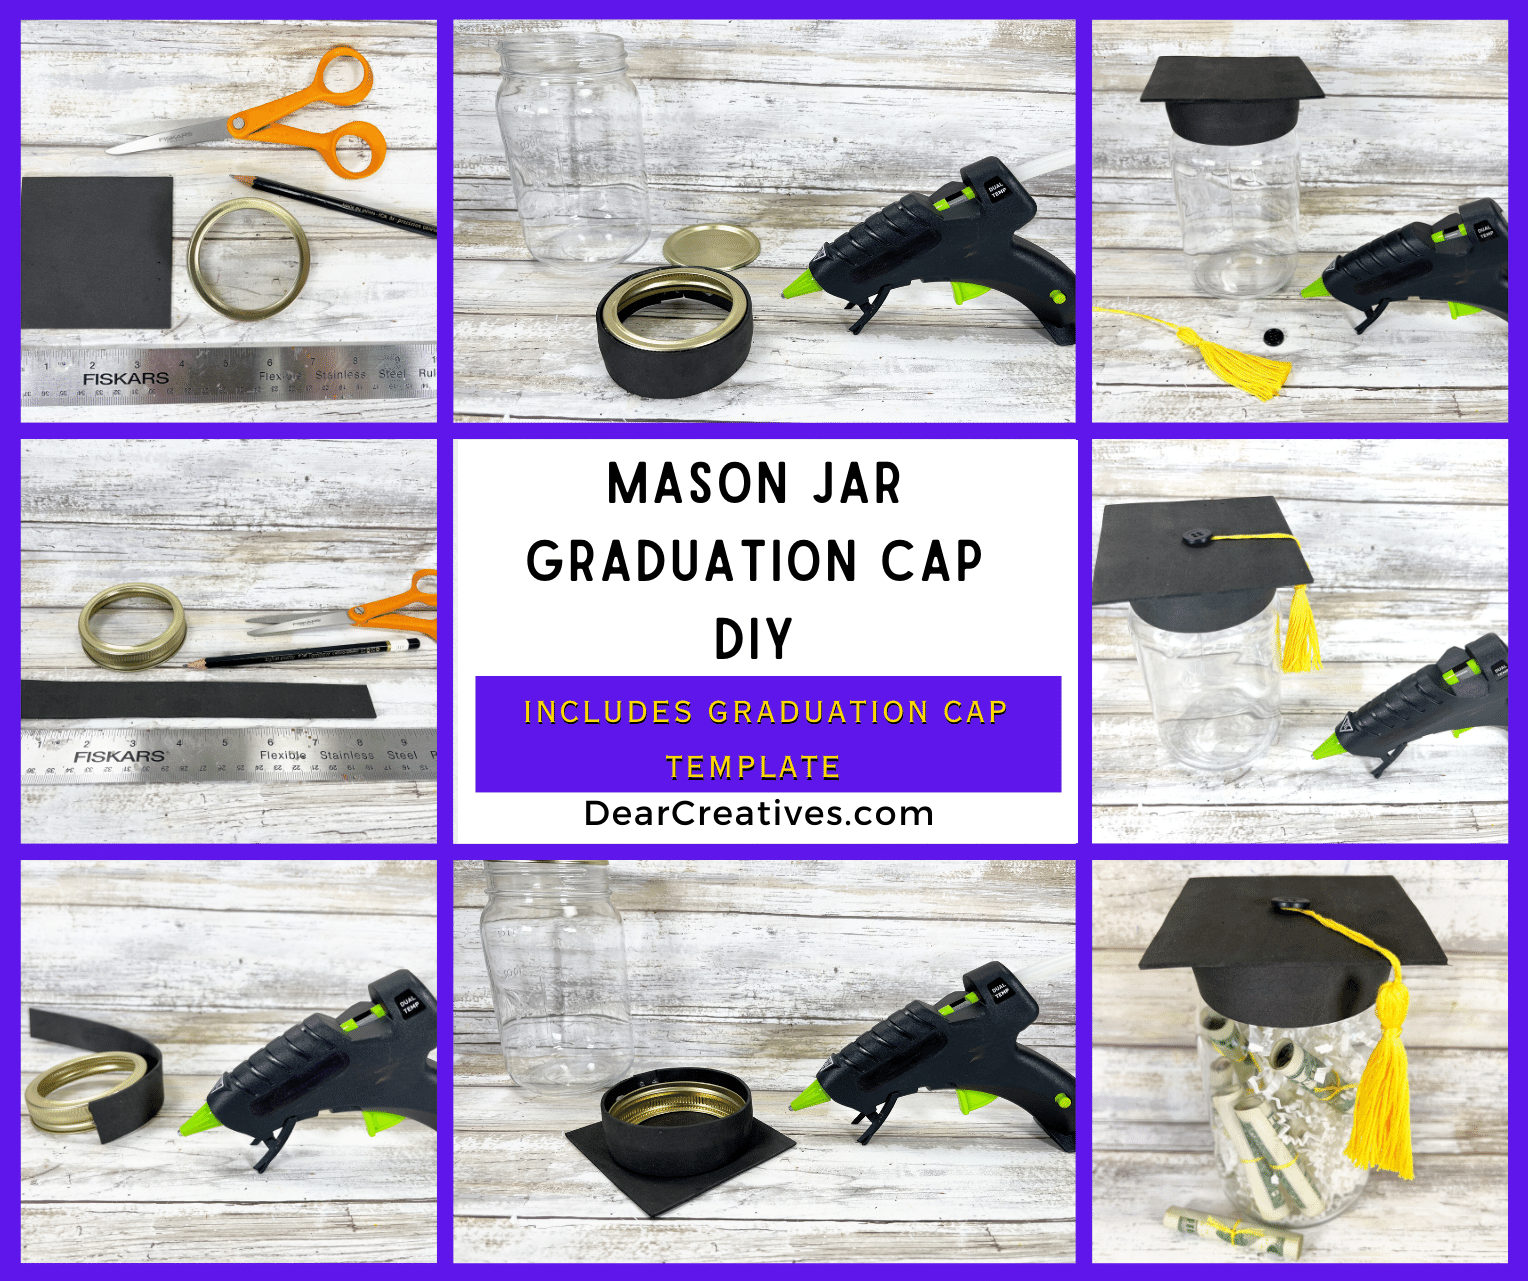 DIY Mason Jar Graduation Cap Step-by-Step Images and Instructions + Get the Graduation Cap Template and instructions for this DIY graduation gift at DearCreatives.com